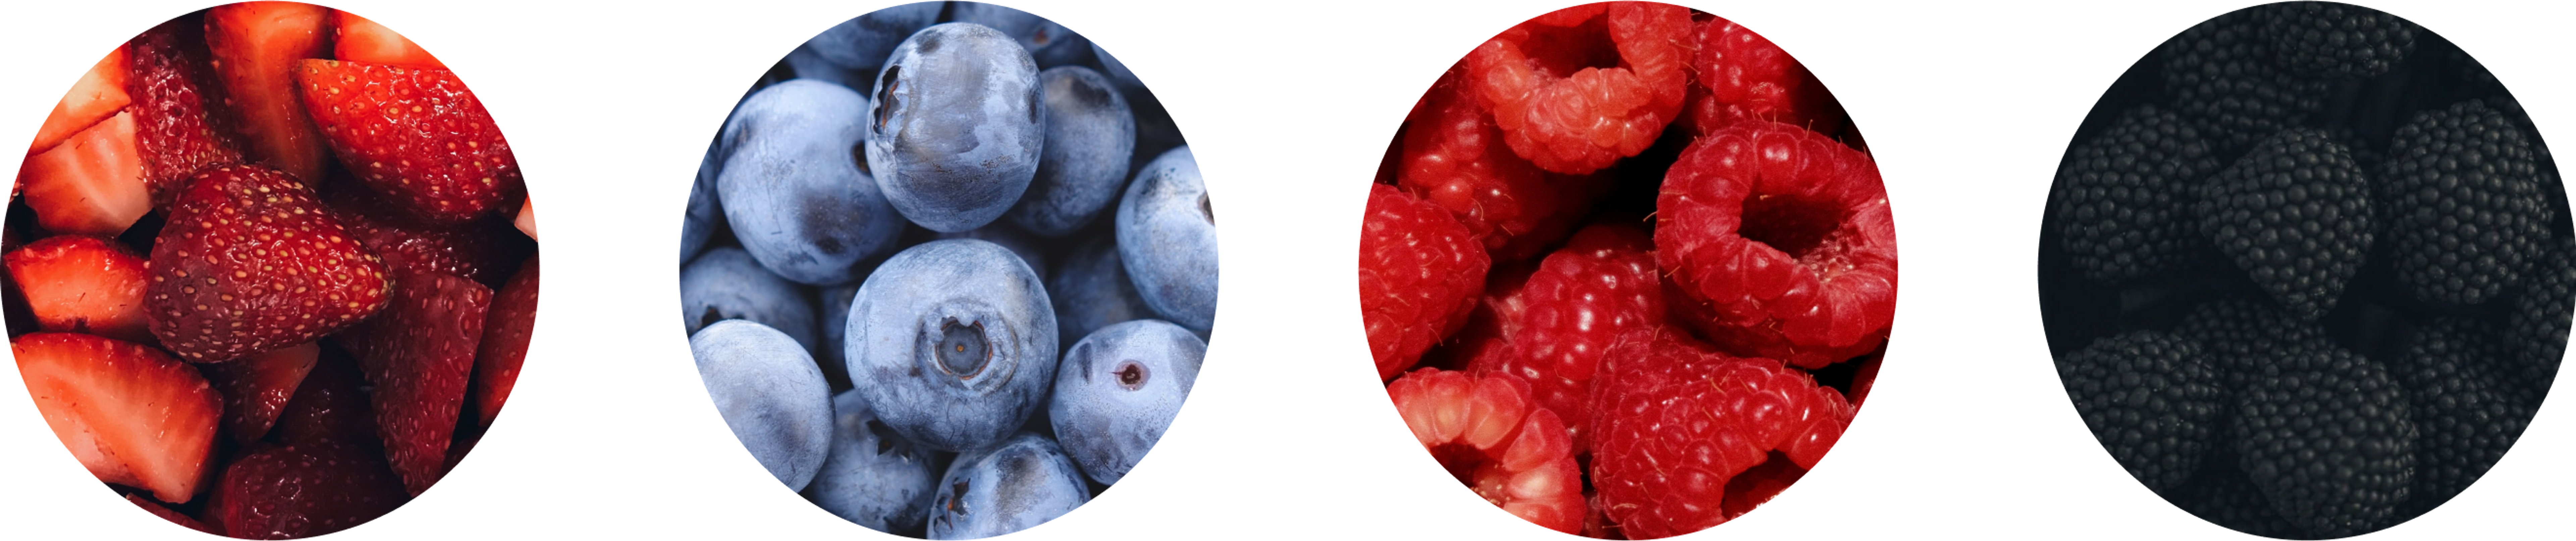 Antioxidant fruits